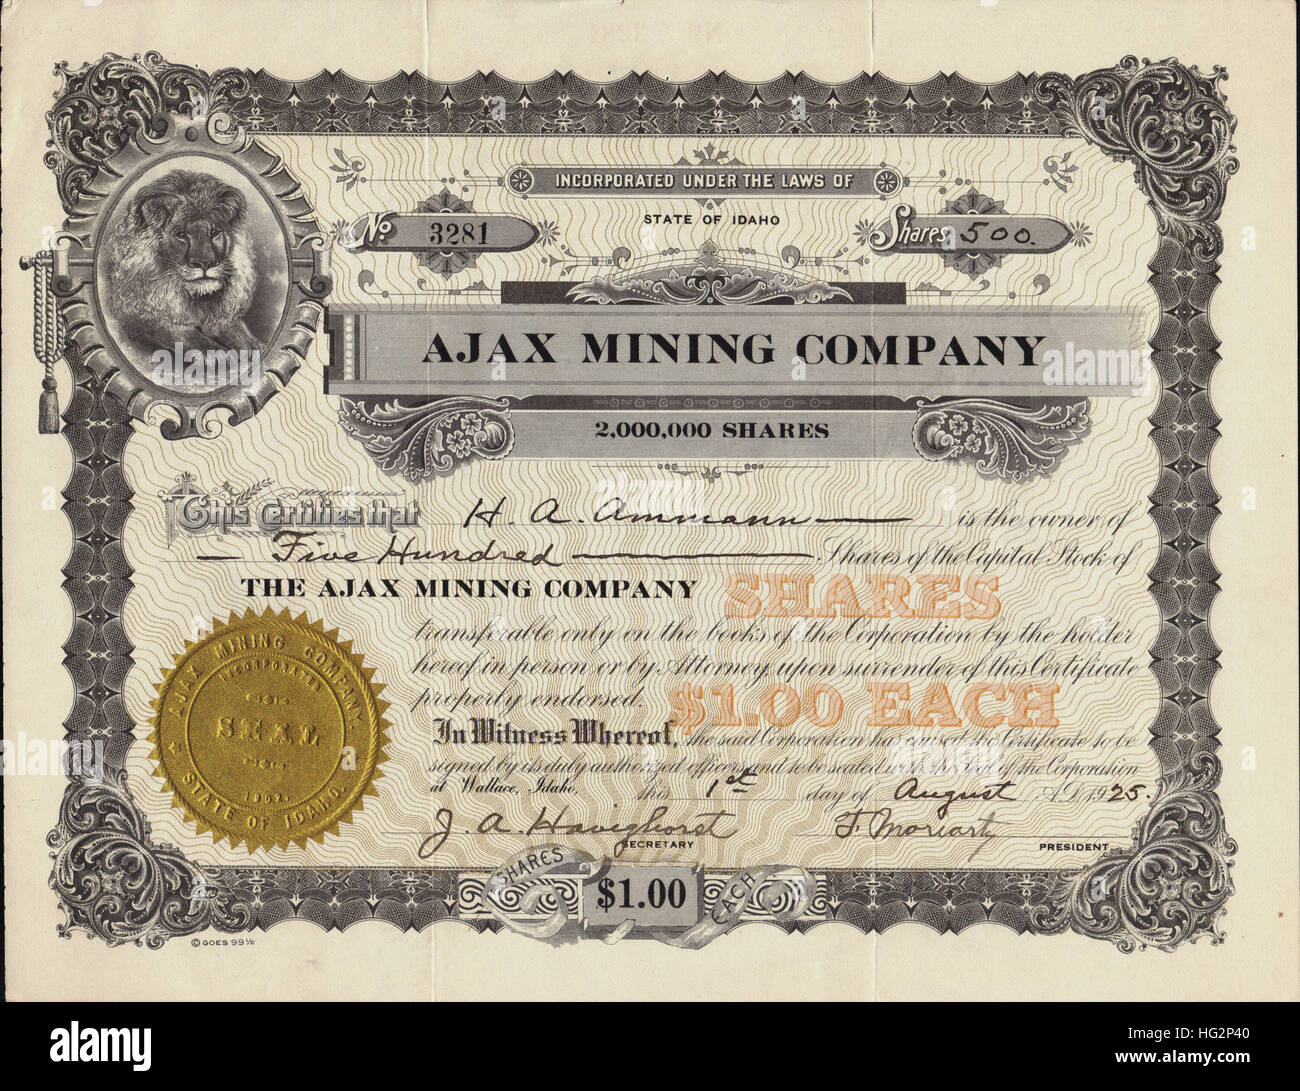 1925 Ajax Mining Company Stock Certificate - Silver Lead Mine - George Gulch - Wallace, Idaho - USA Stock Photo